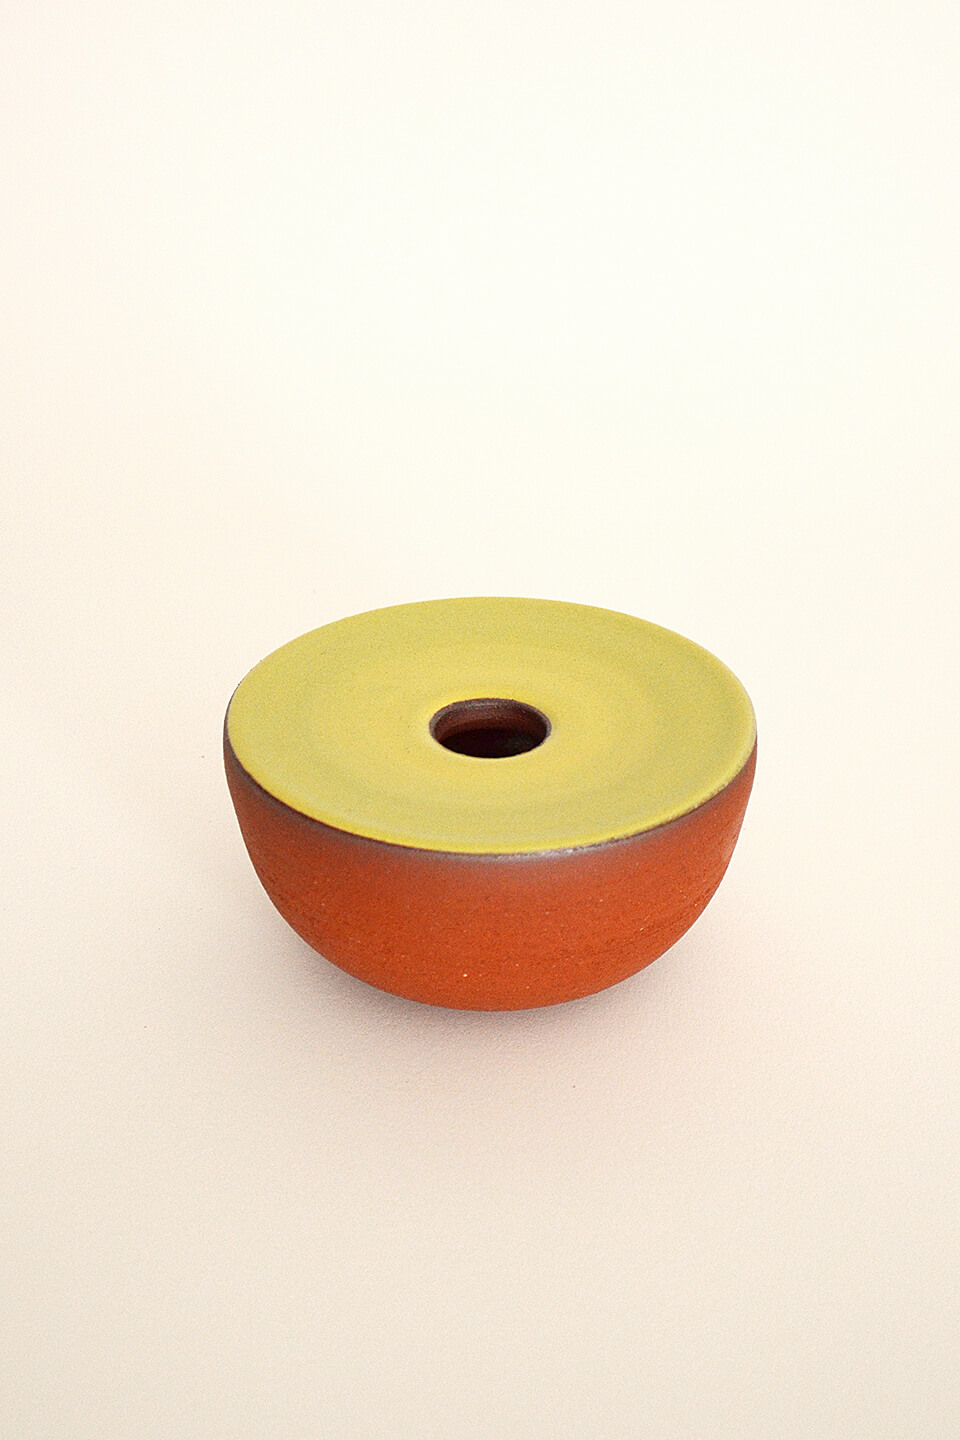 Satin Yellow Green Ceramic Vase No. 660